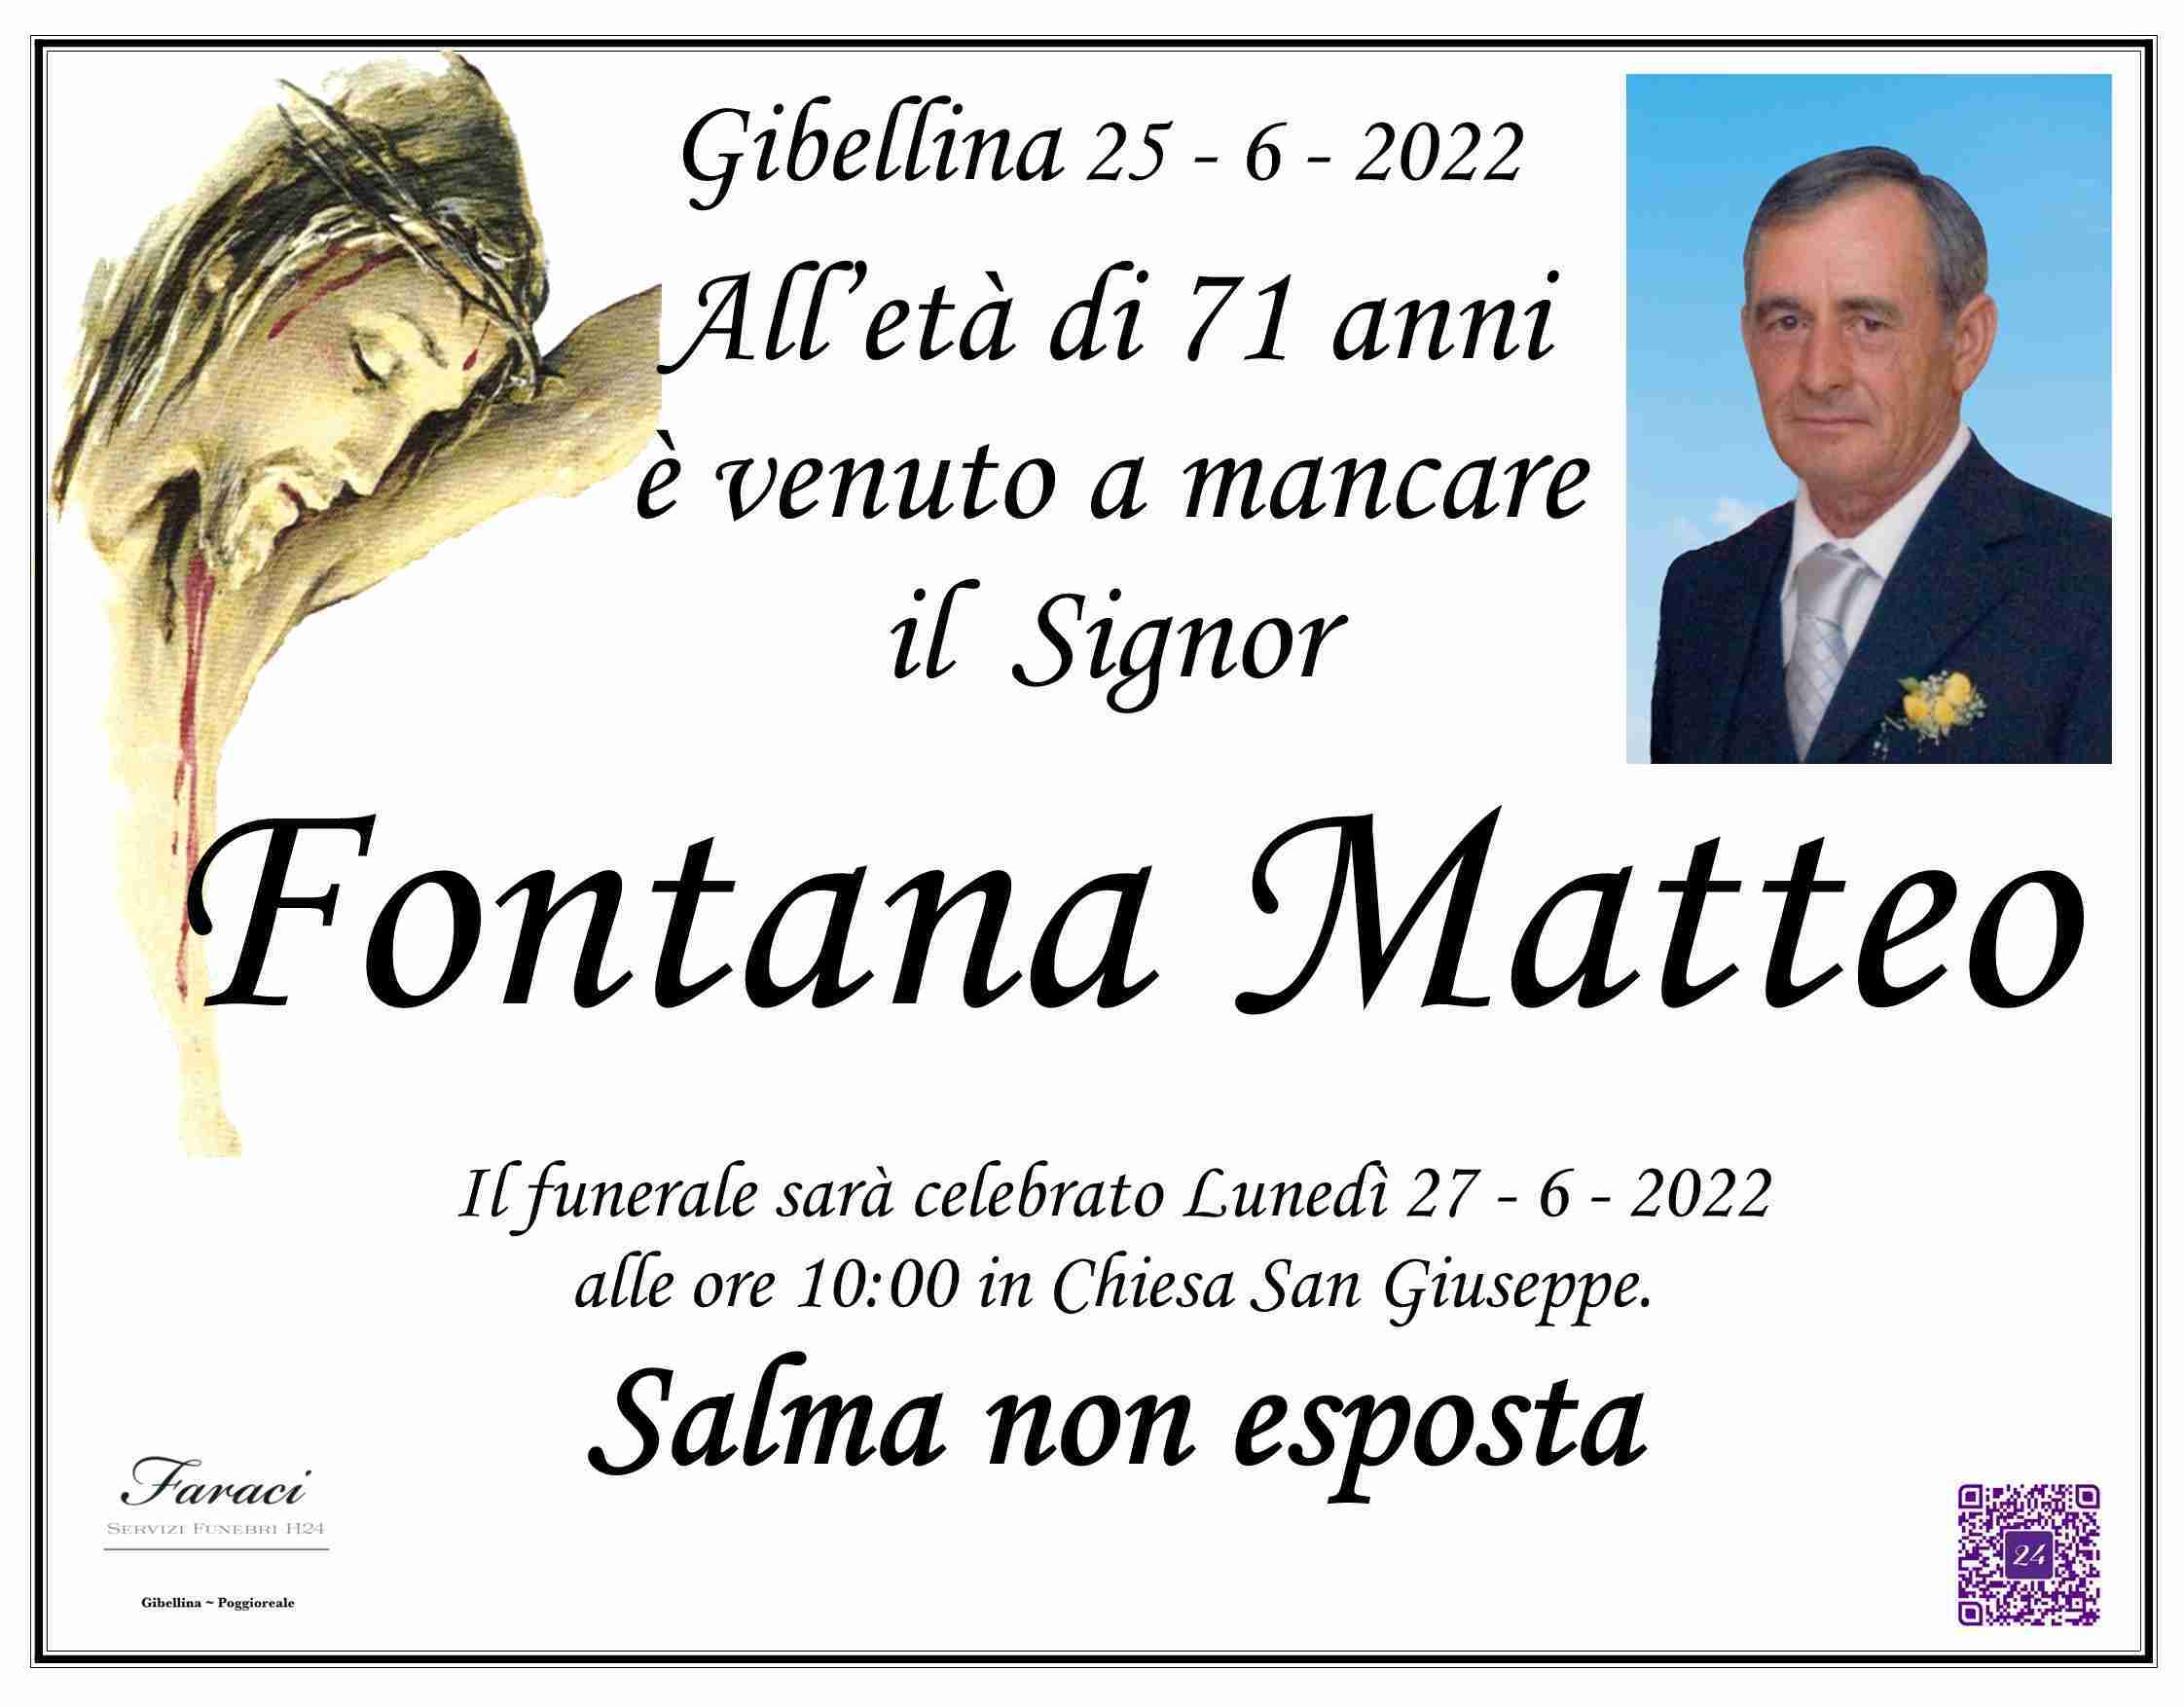 Matteo Fontana